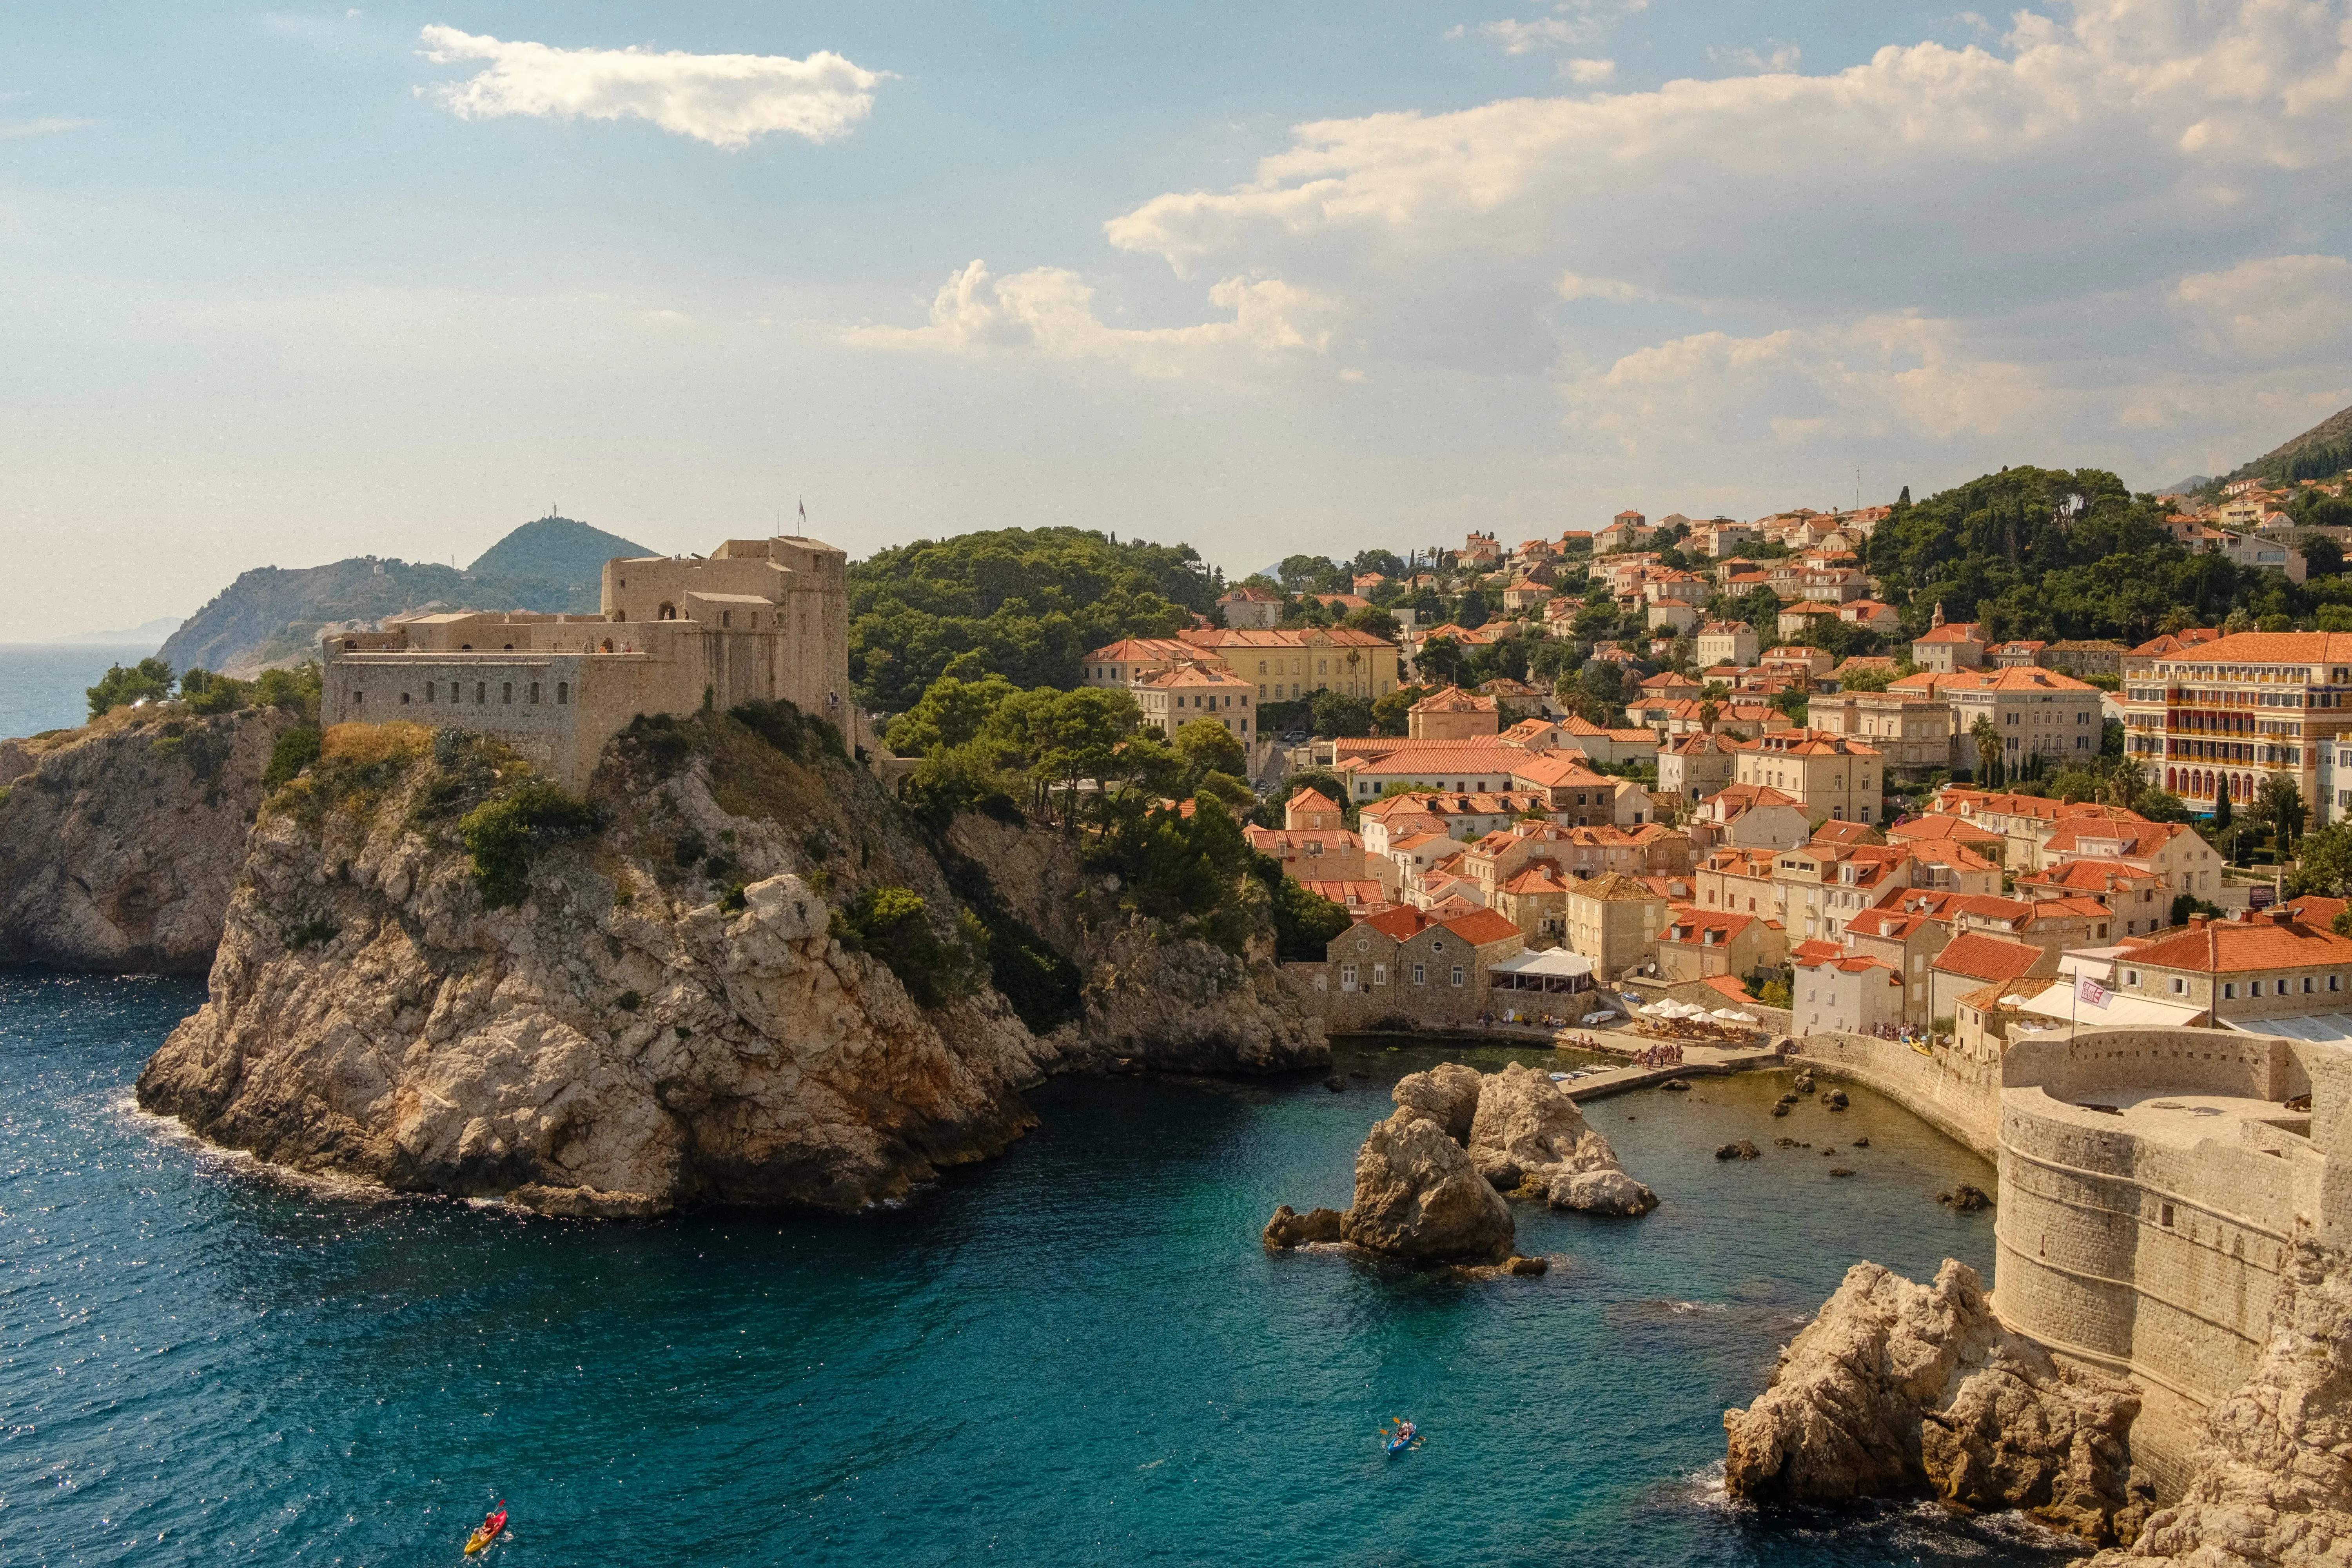 Slano - Dubrovnik